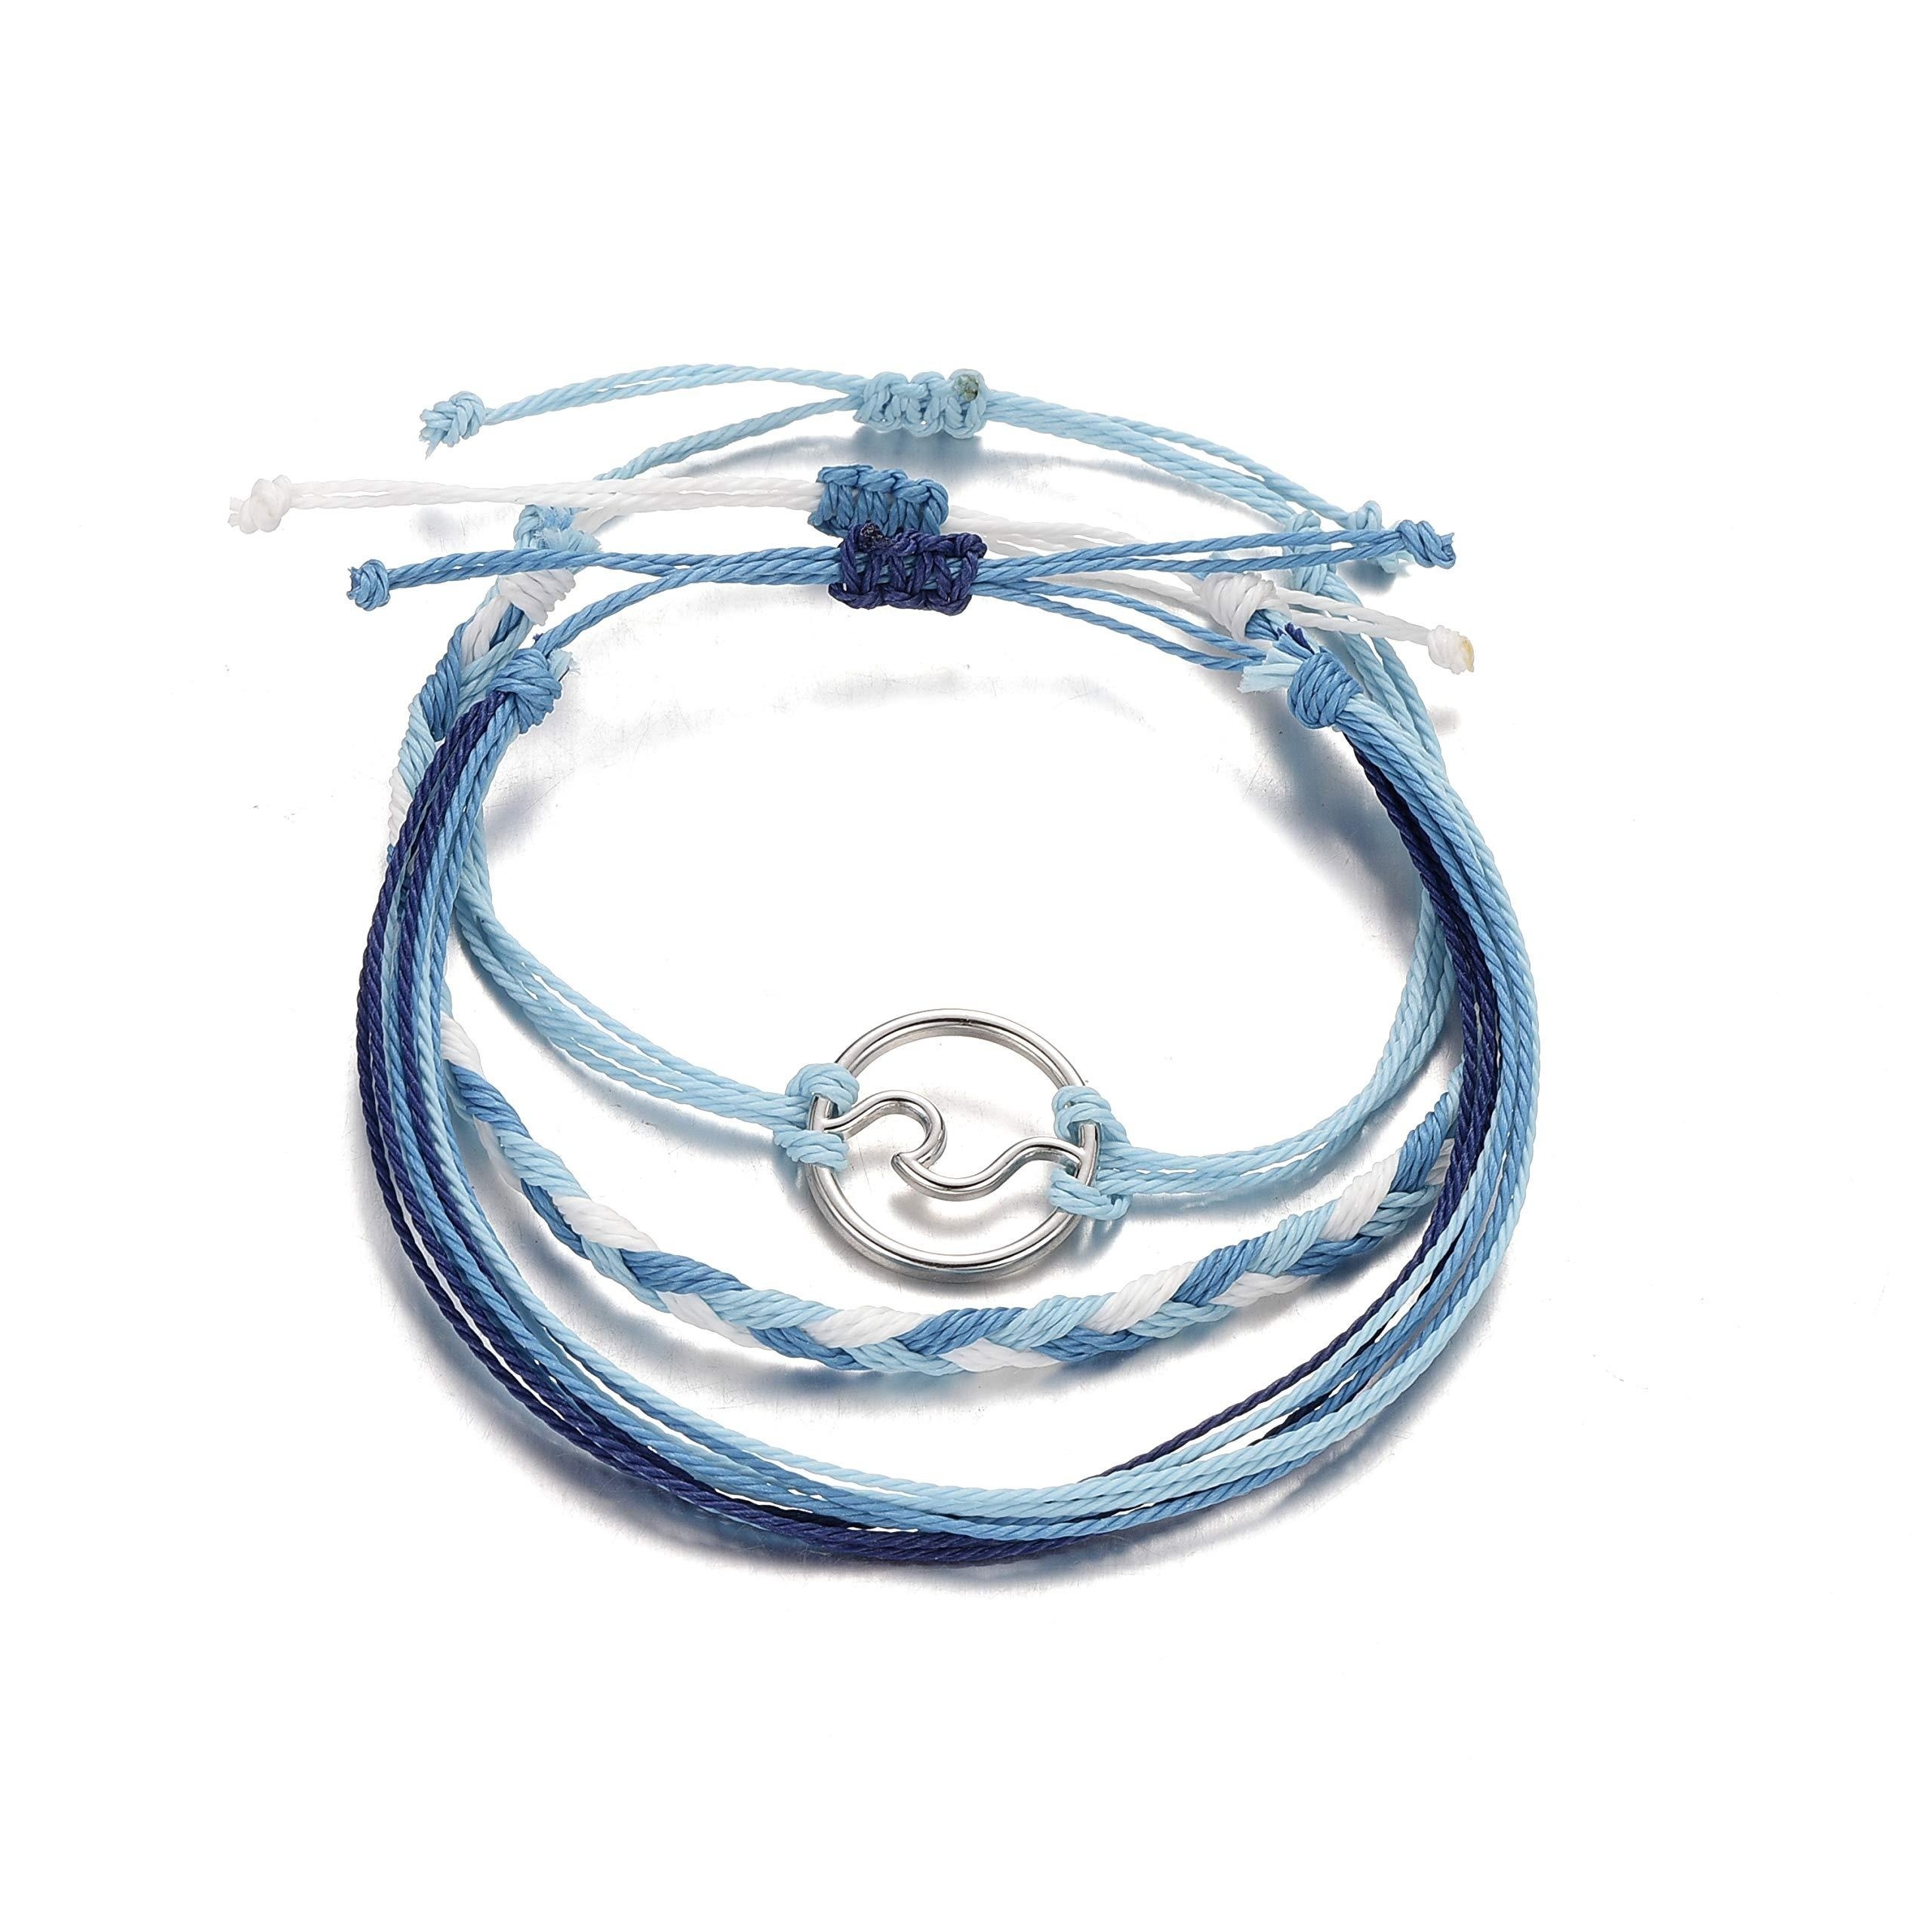 String Wave Bracelets For Women Girls Handmade Colorful Waterproof Adjustable Braided Beach Bracelet Set